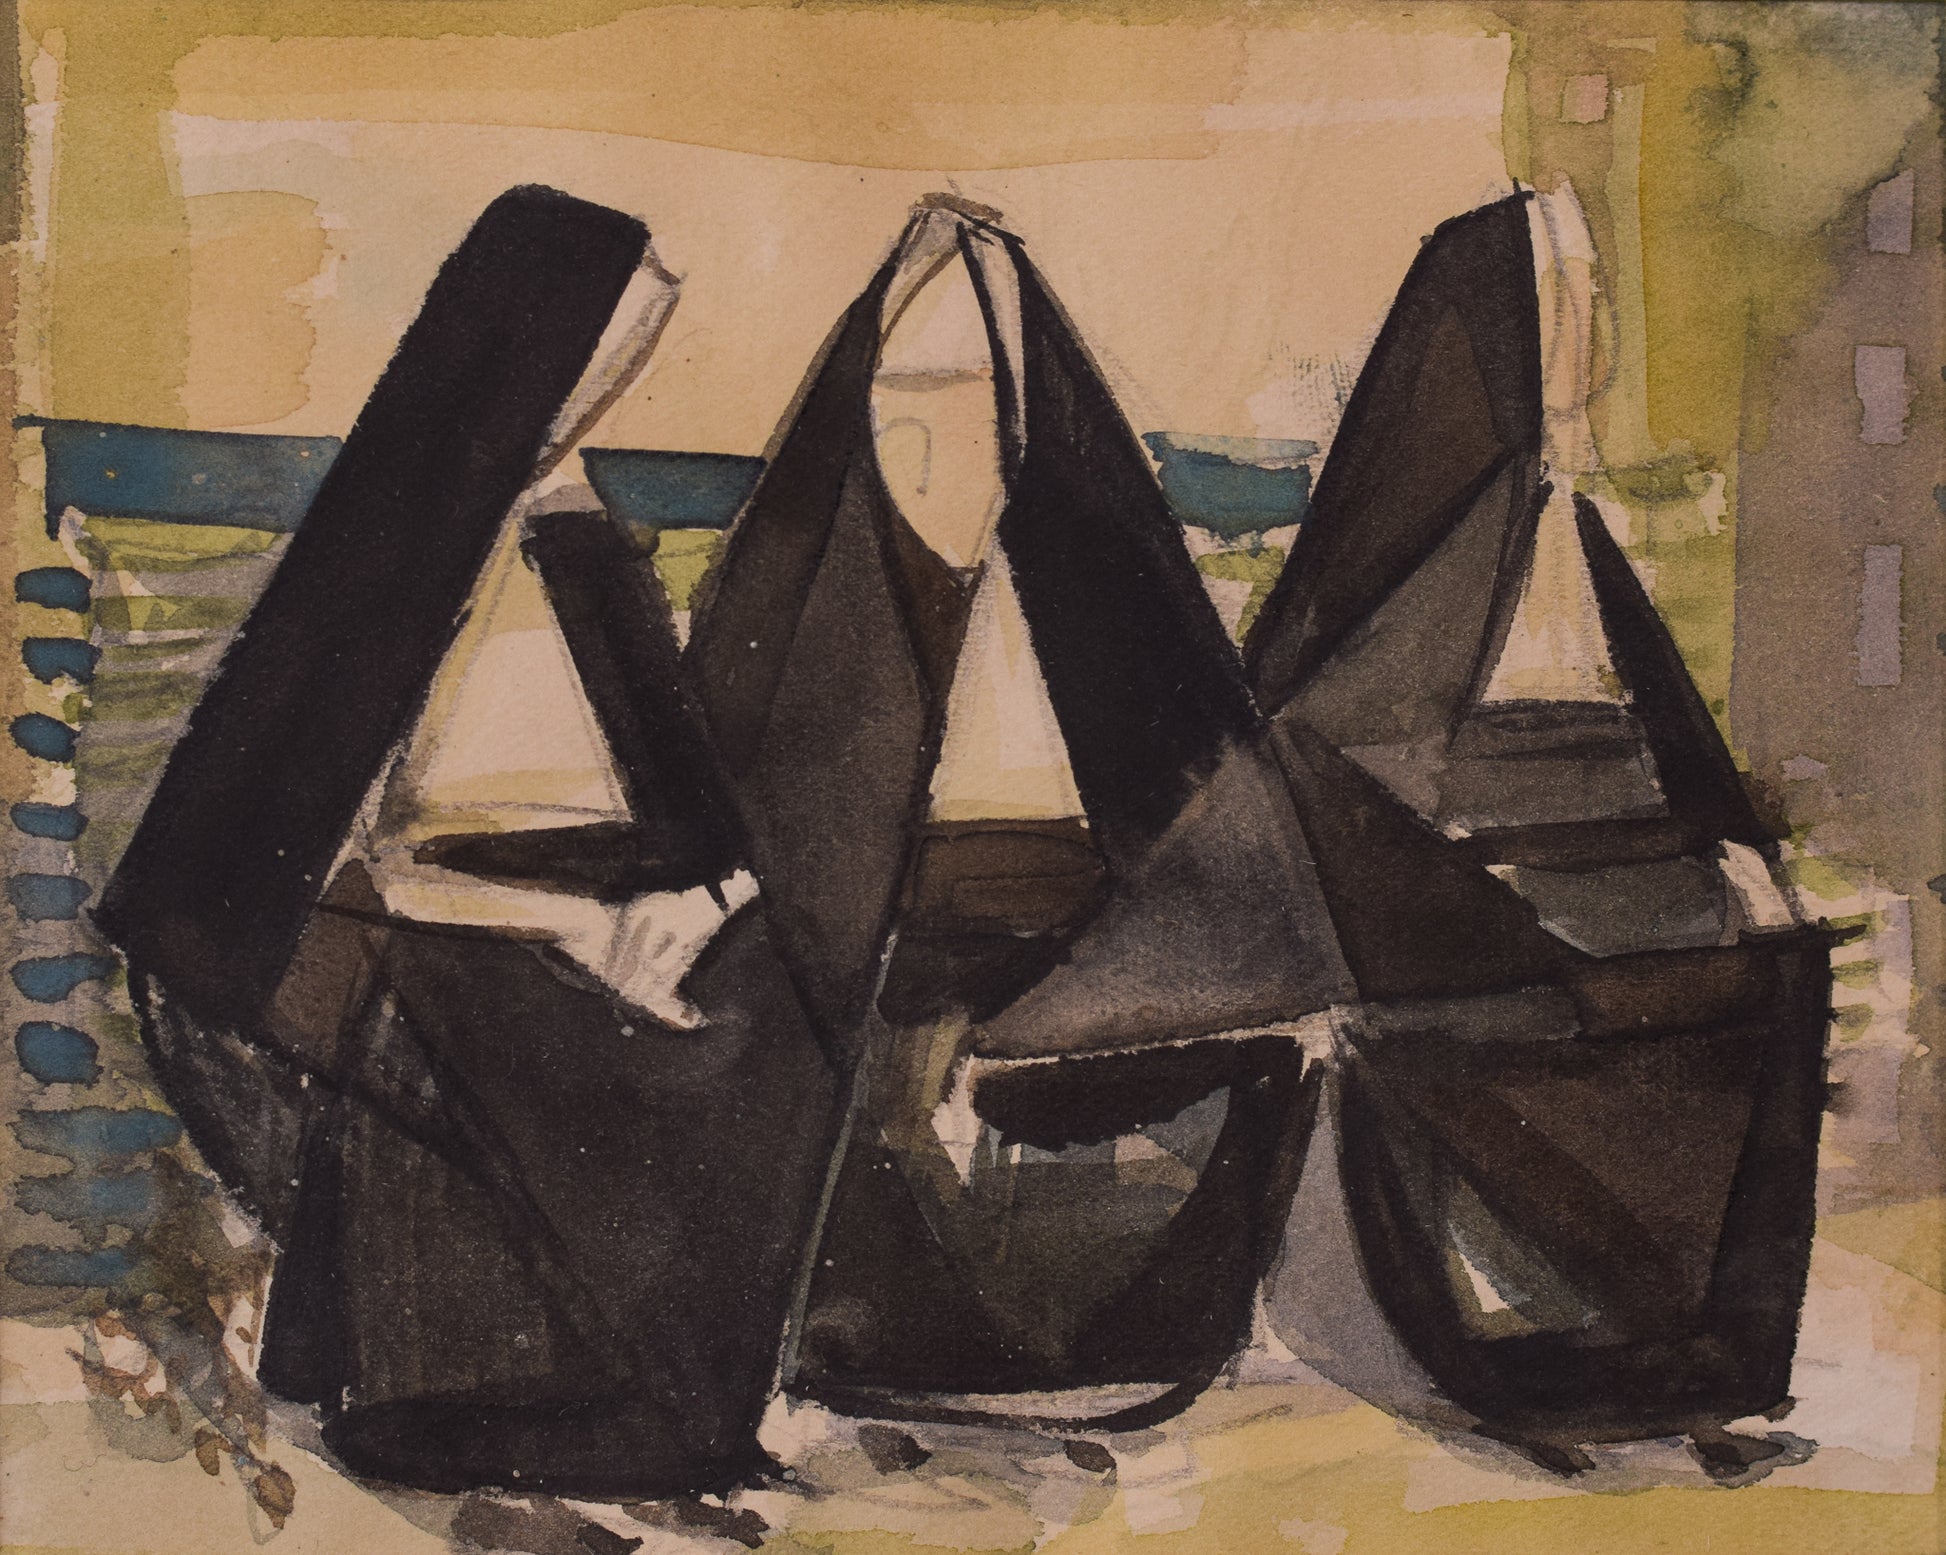 Abstract Painting of Three Nuns